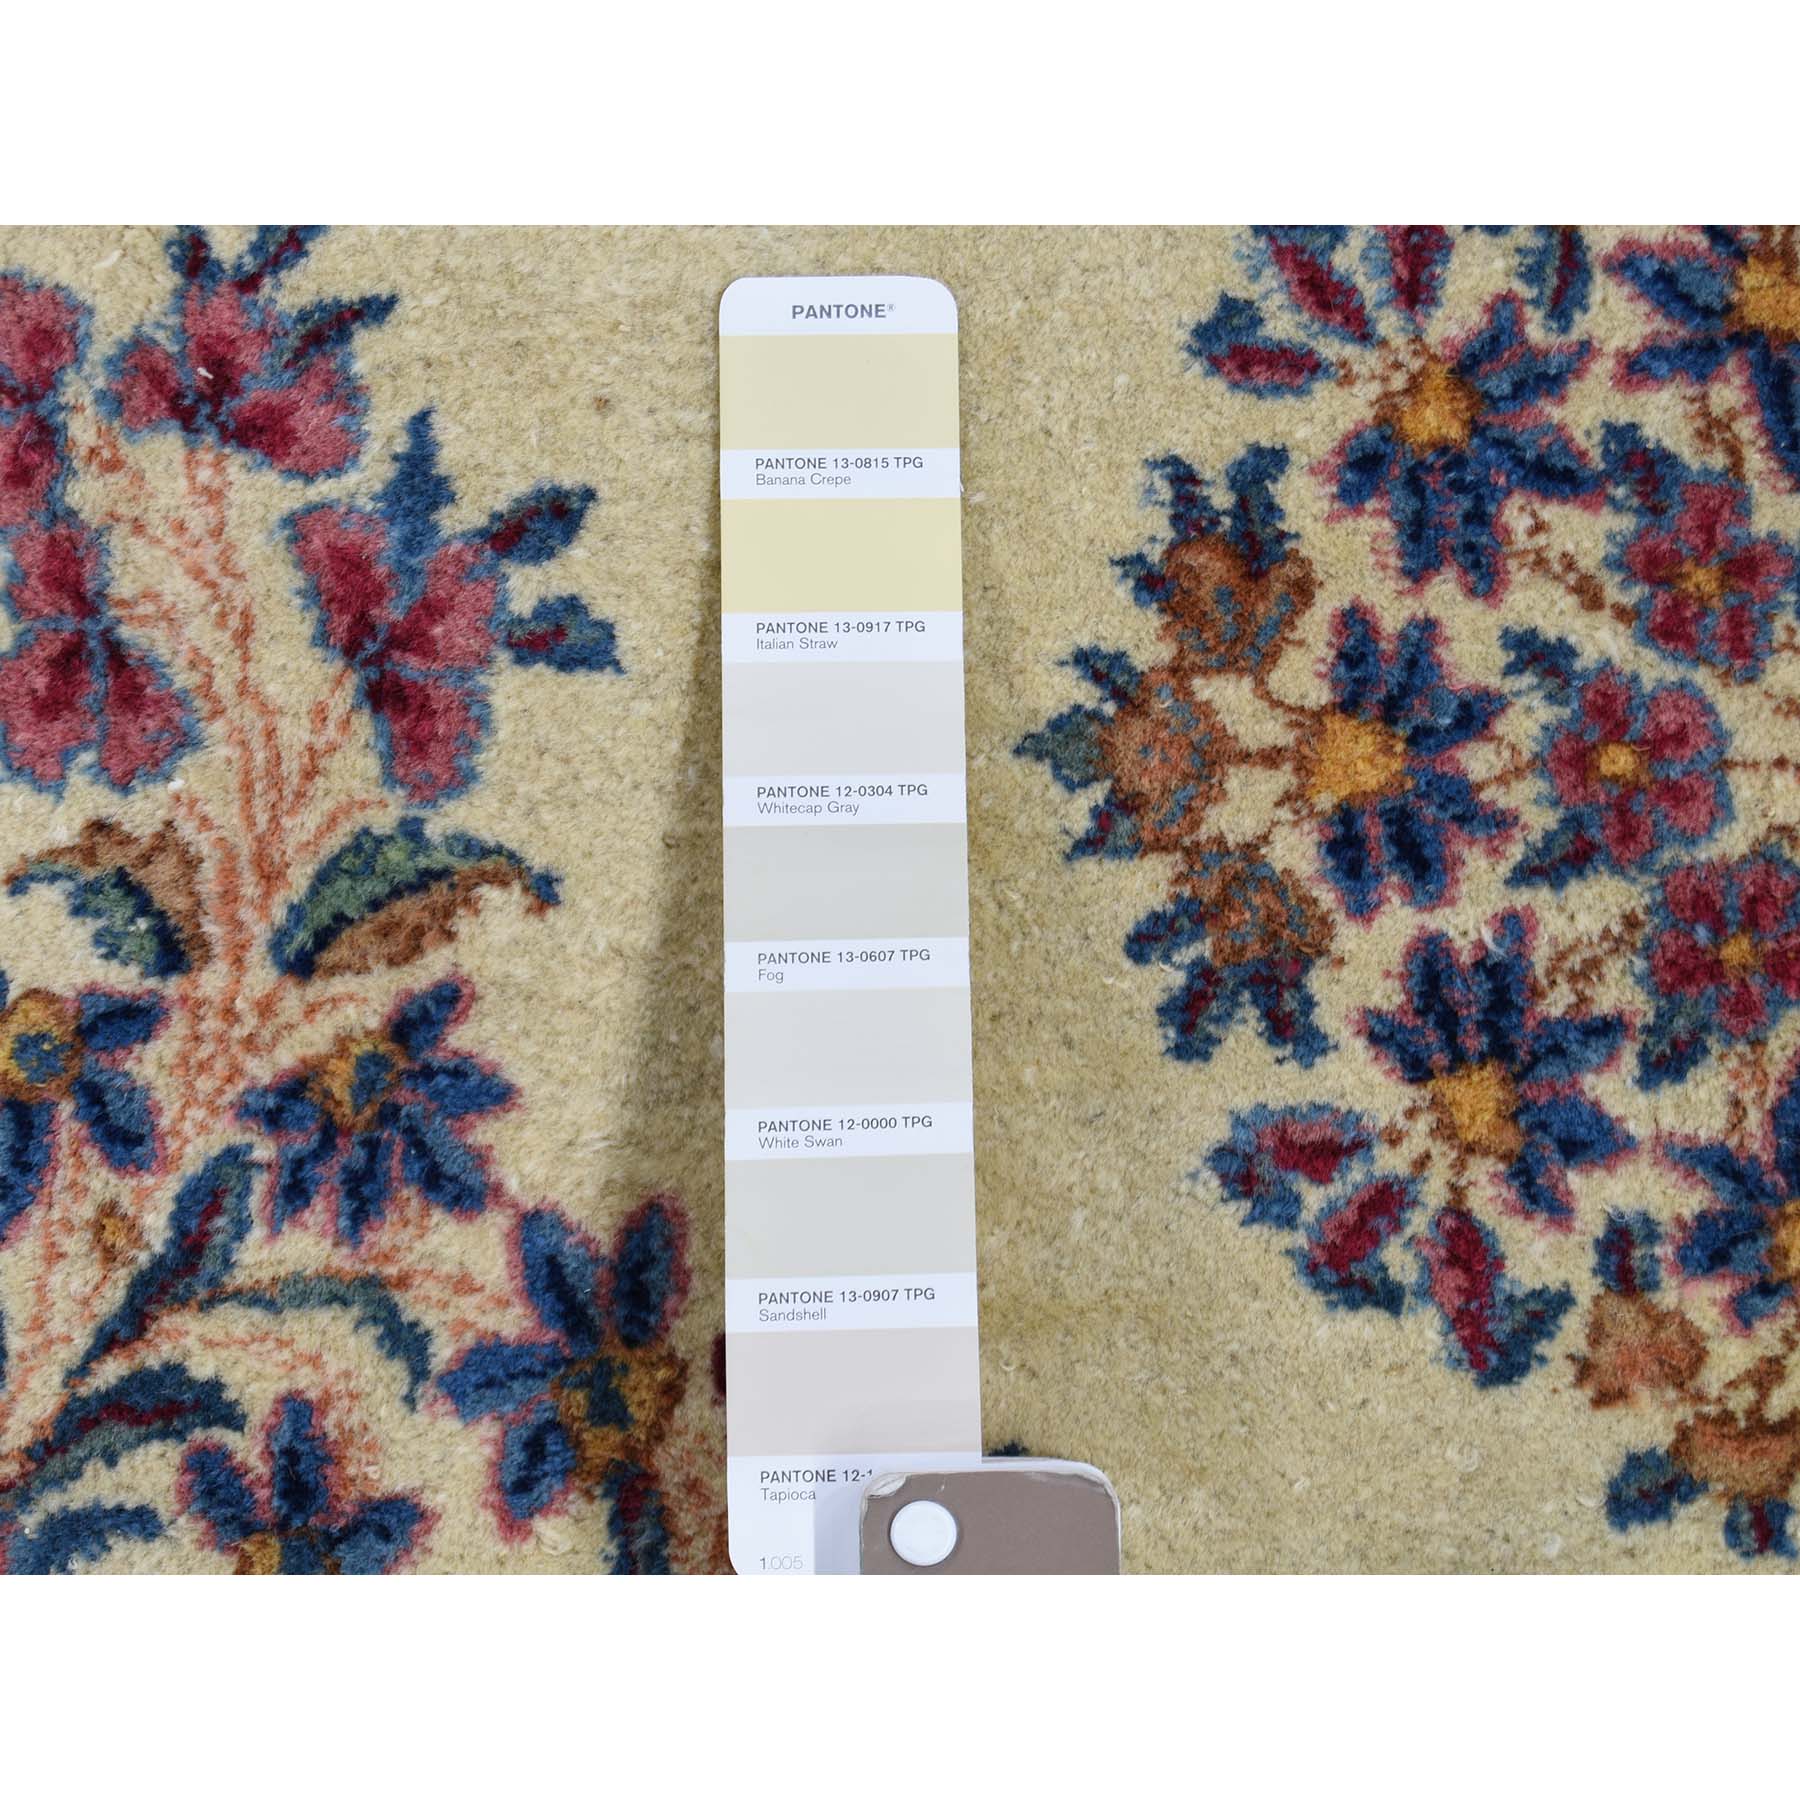 11-4 x16-9  Semi Antique Persian Kerman Mint Condition Full Pile Soft Oversize Oriental Rug 